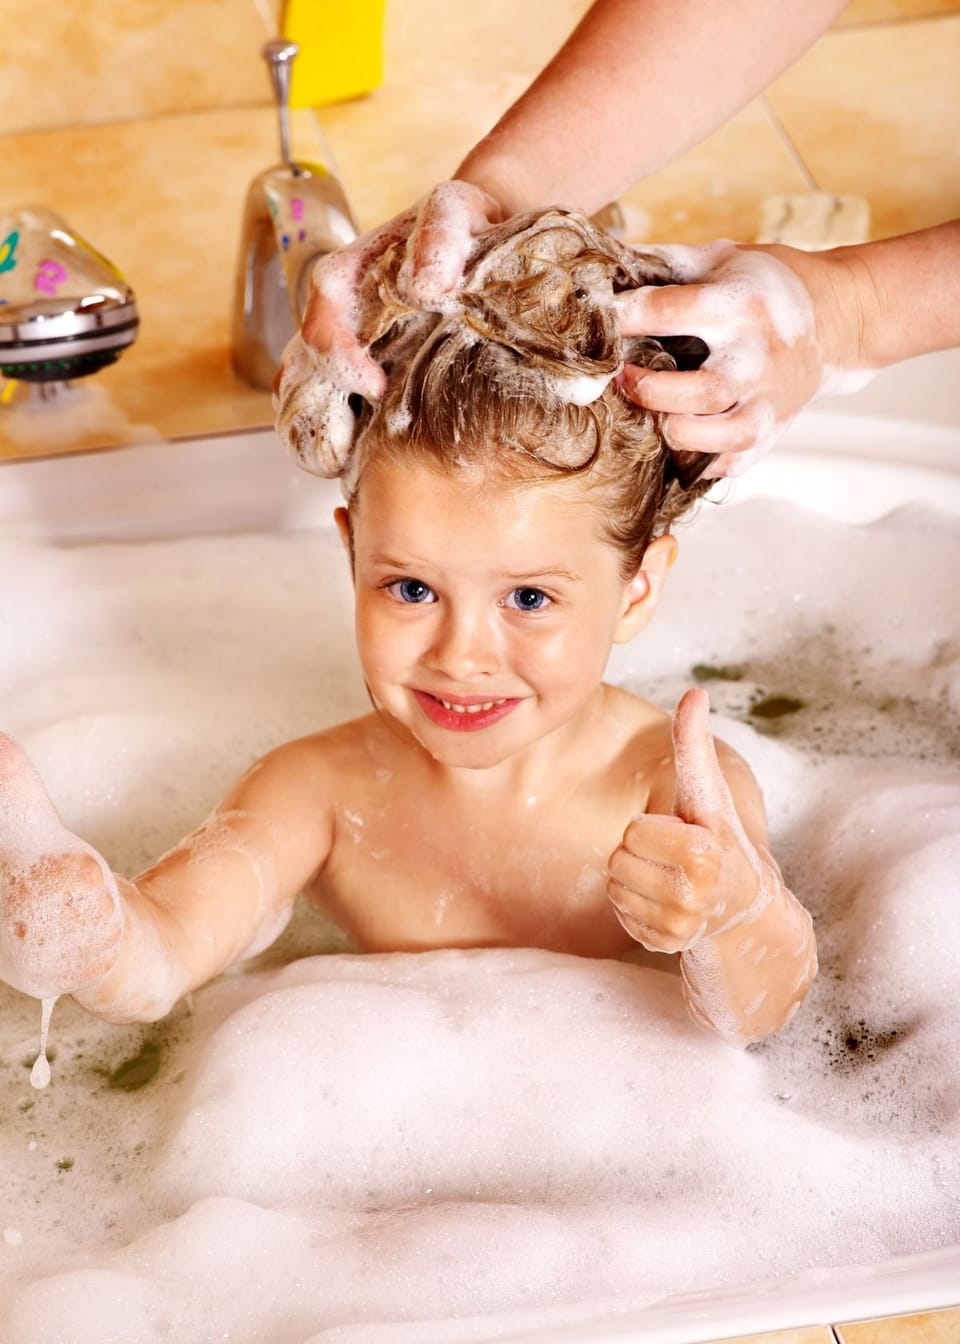 What Is a Good Dandruff Shampoo for Kids